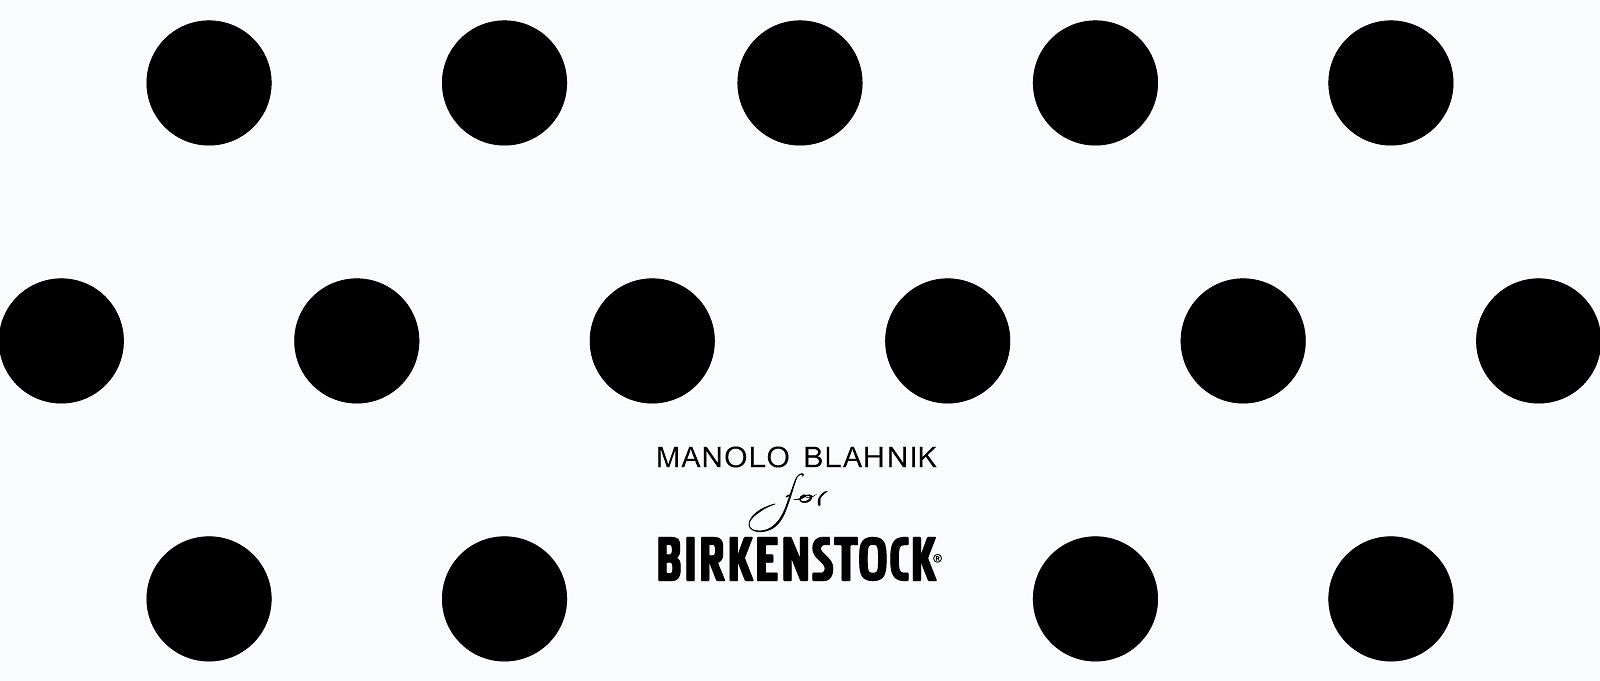 Manolo Blahnik for Birkenstock